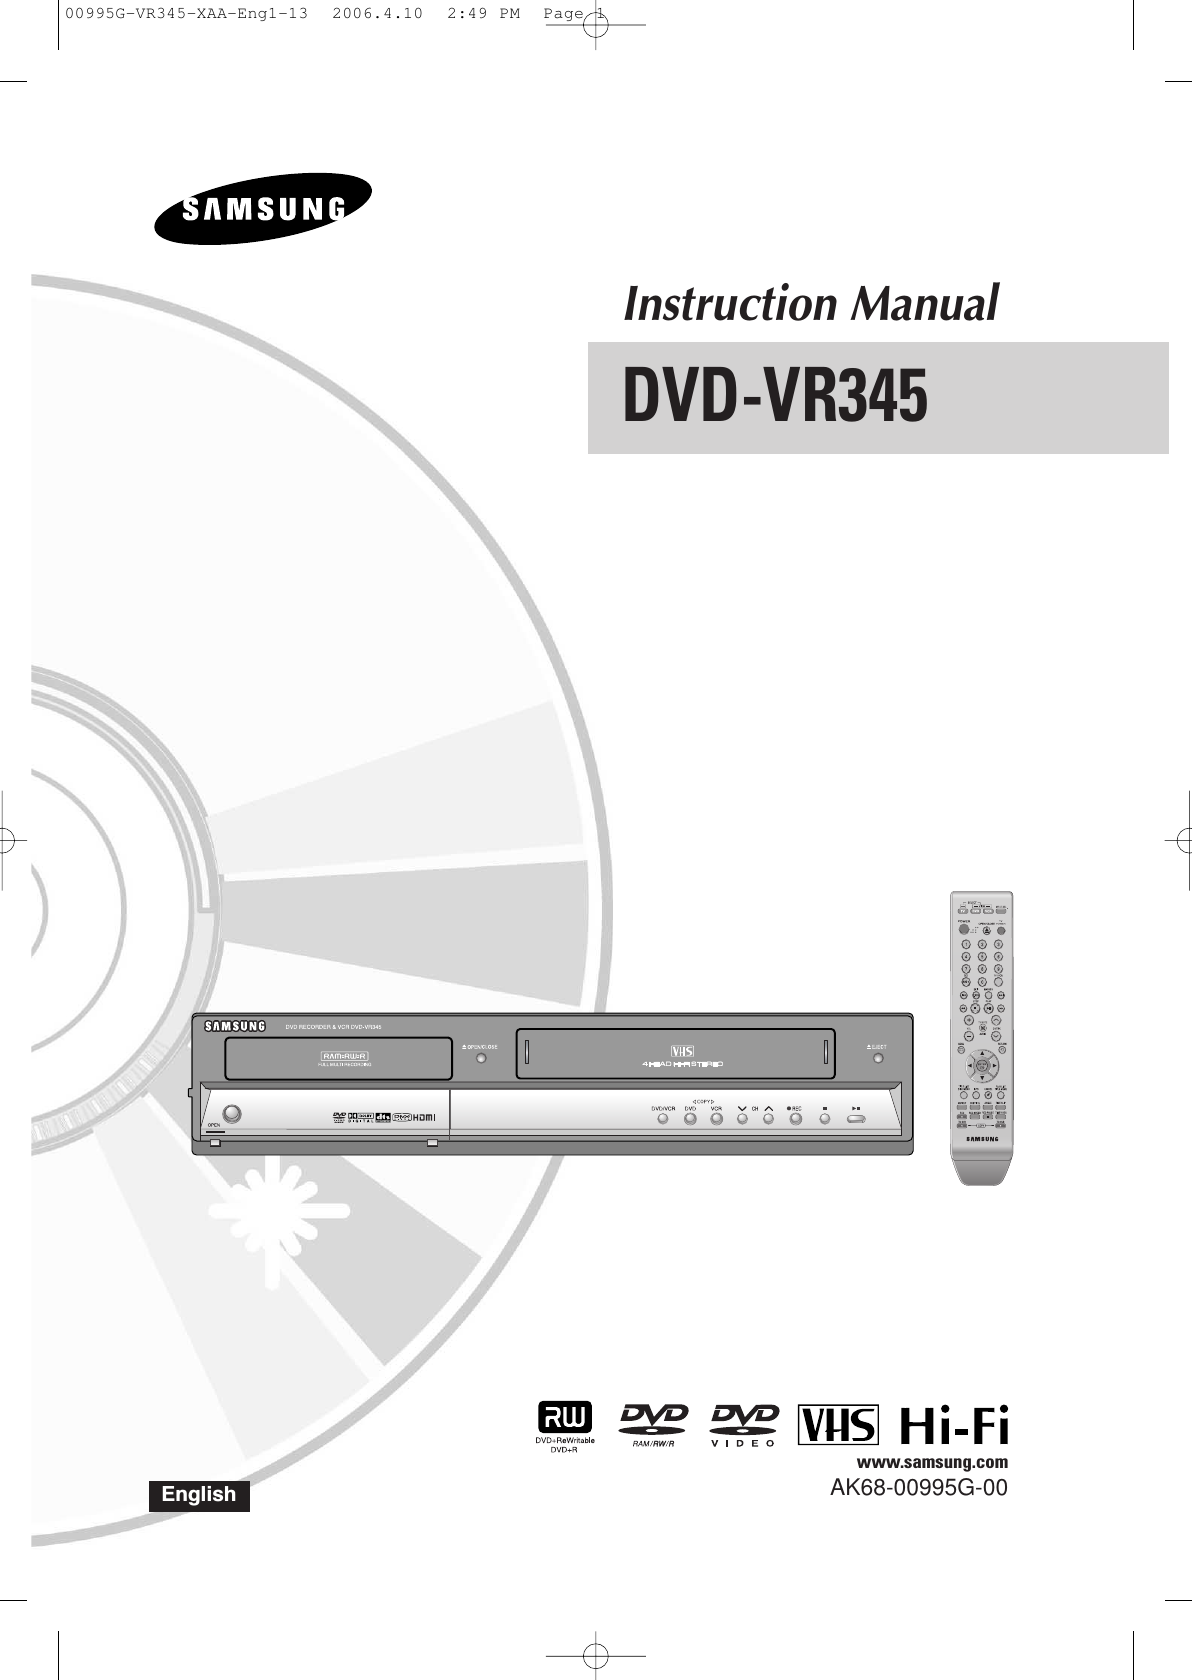 Instruction ManualDVD-VR345www.samsung.comAK68-00995G-00English00995G-VR345-XAA-Eng1-13  2006.4.10  2:49 PM  Page 1